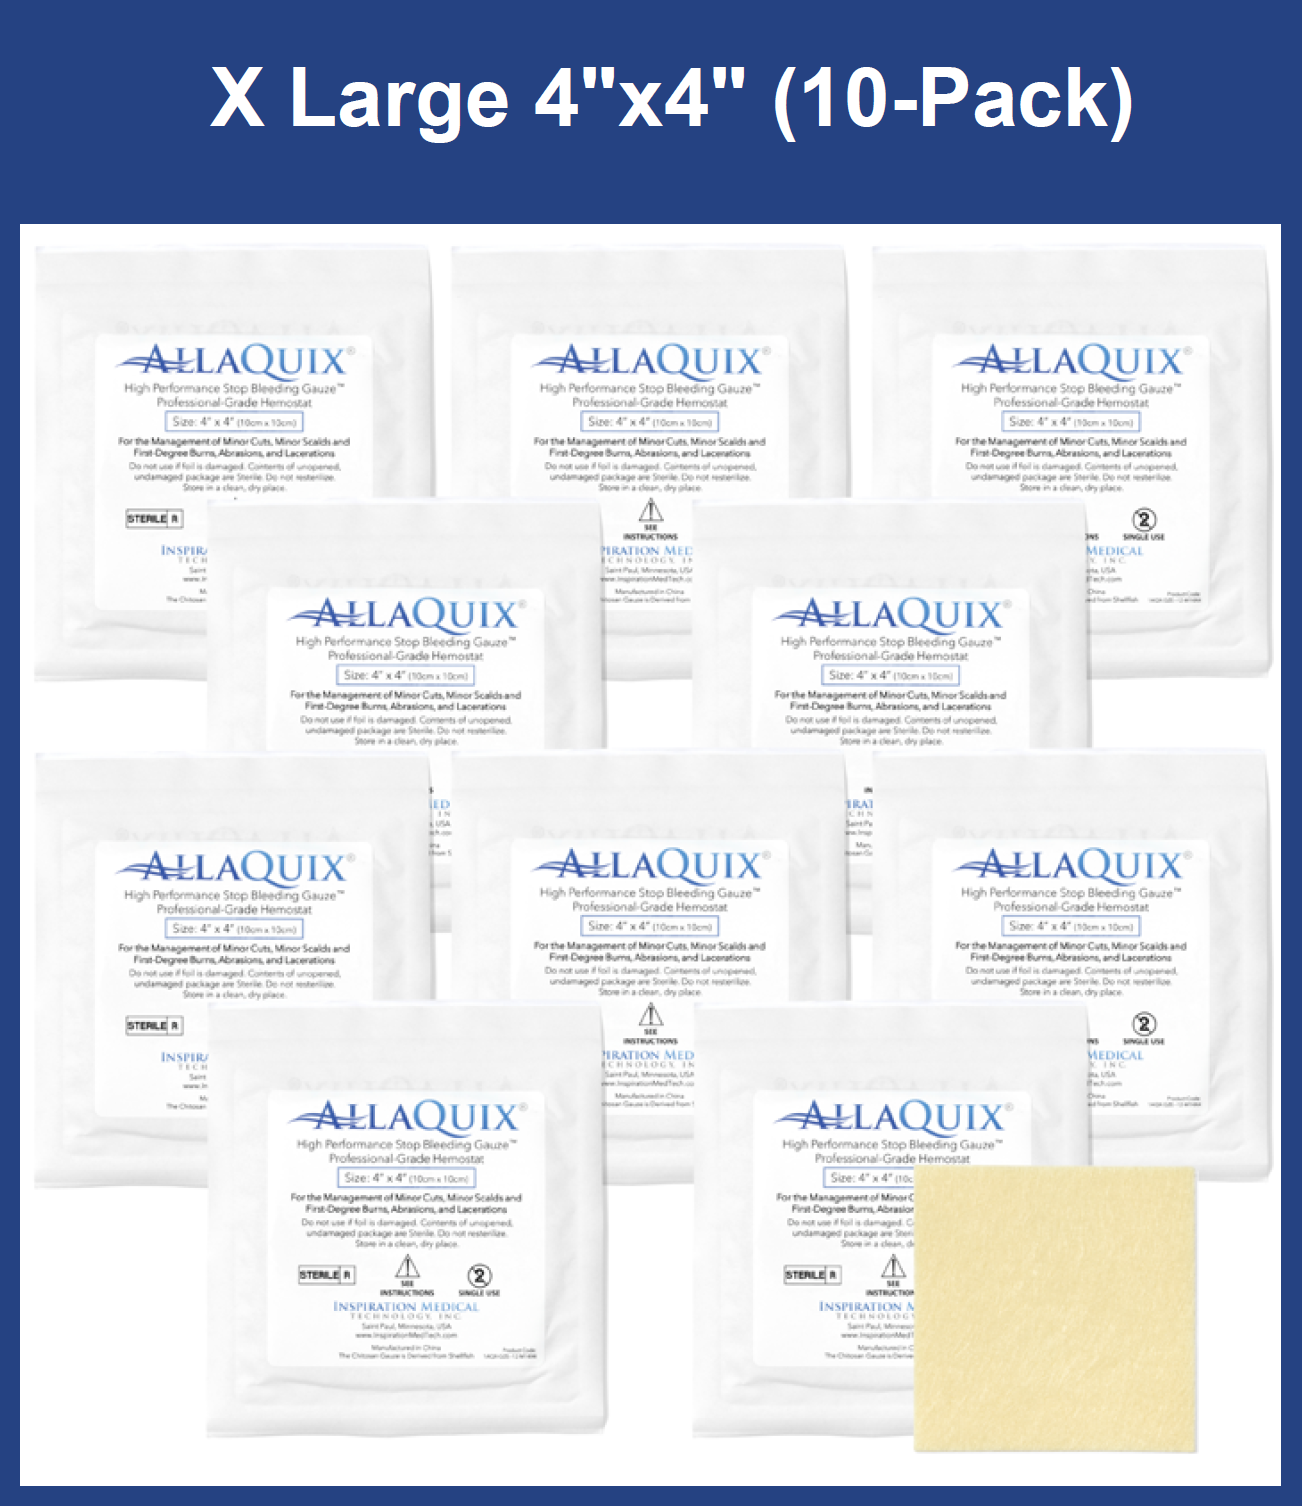 AllaQuix High-Performance Stop Bleeding Gauze (XL 4in)